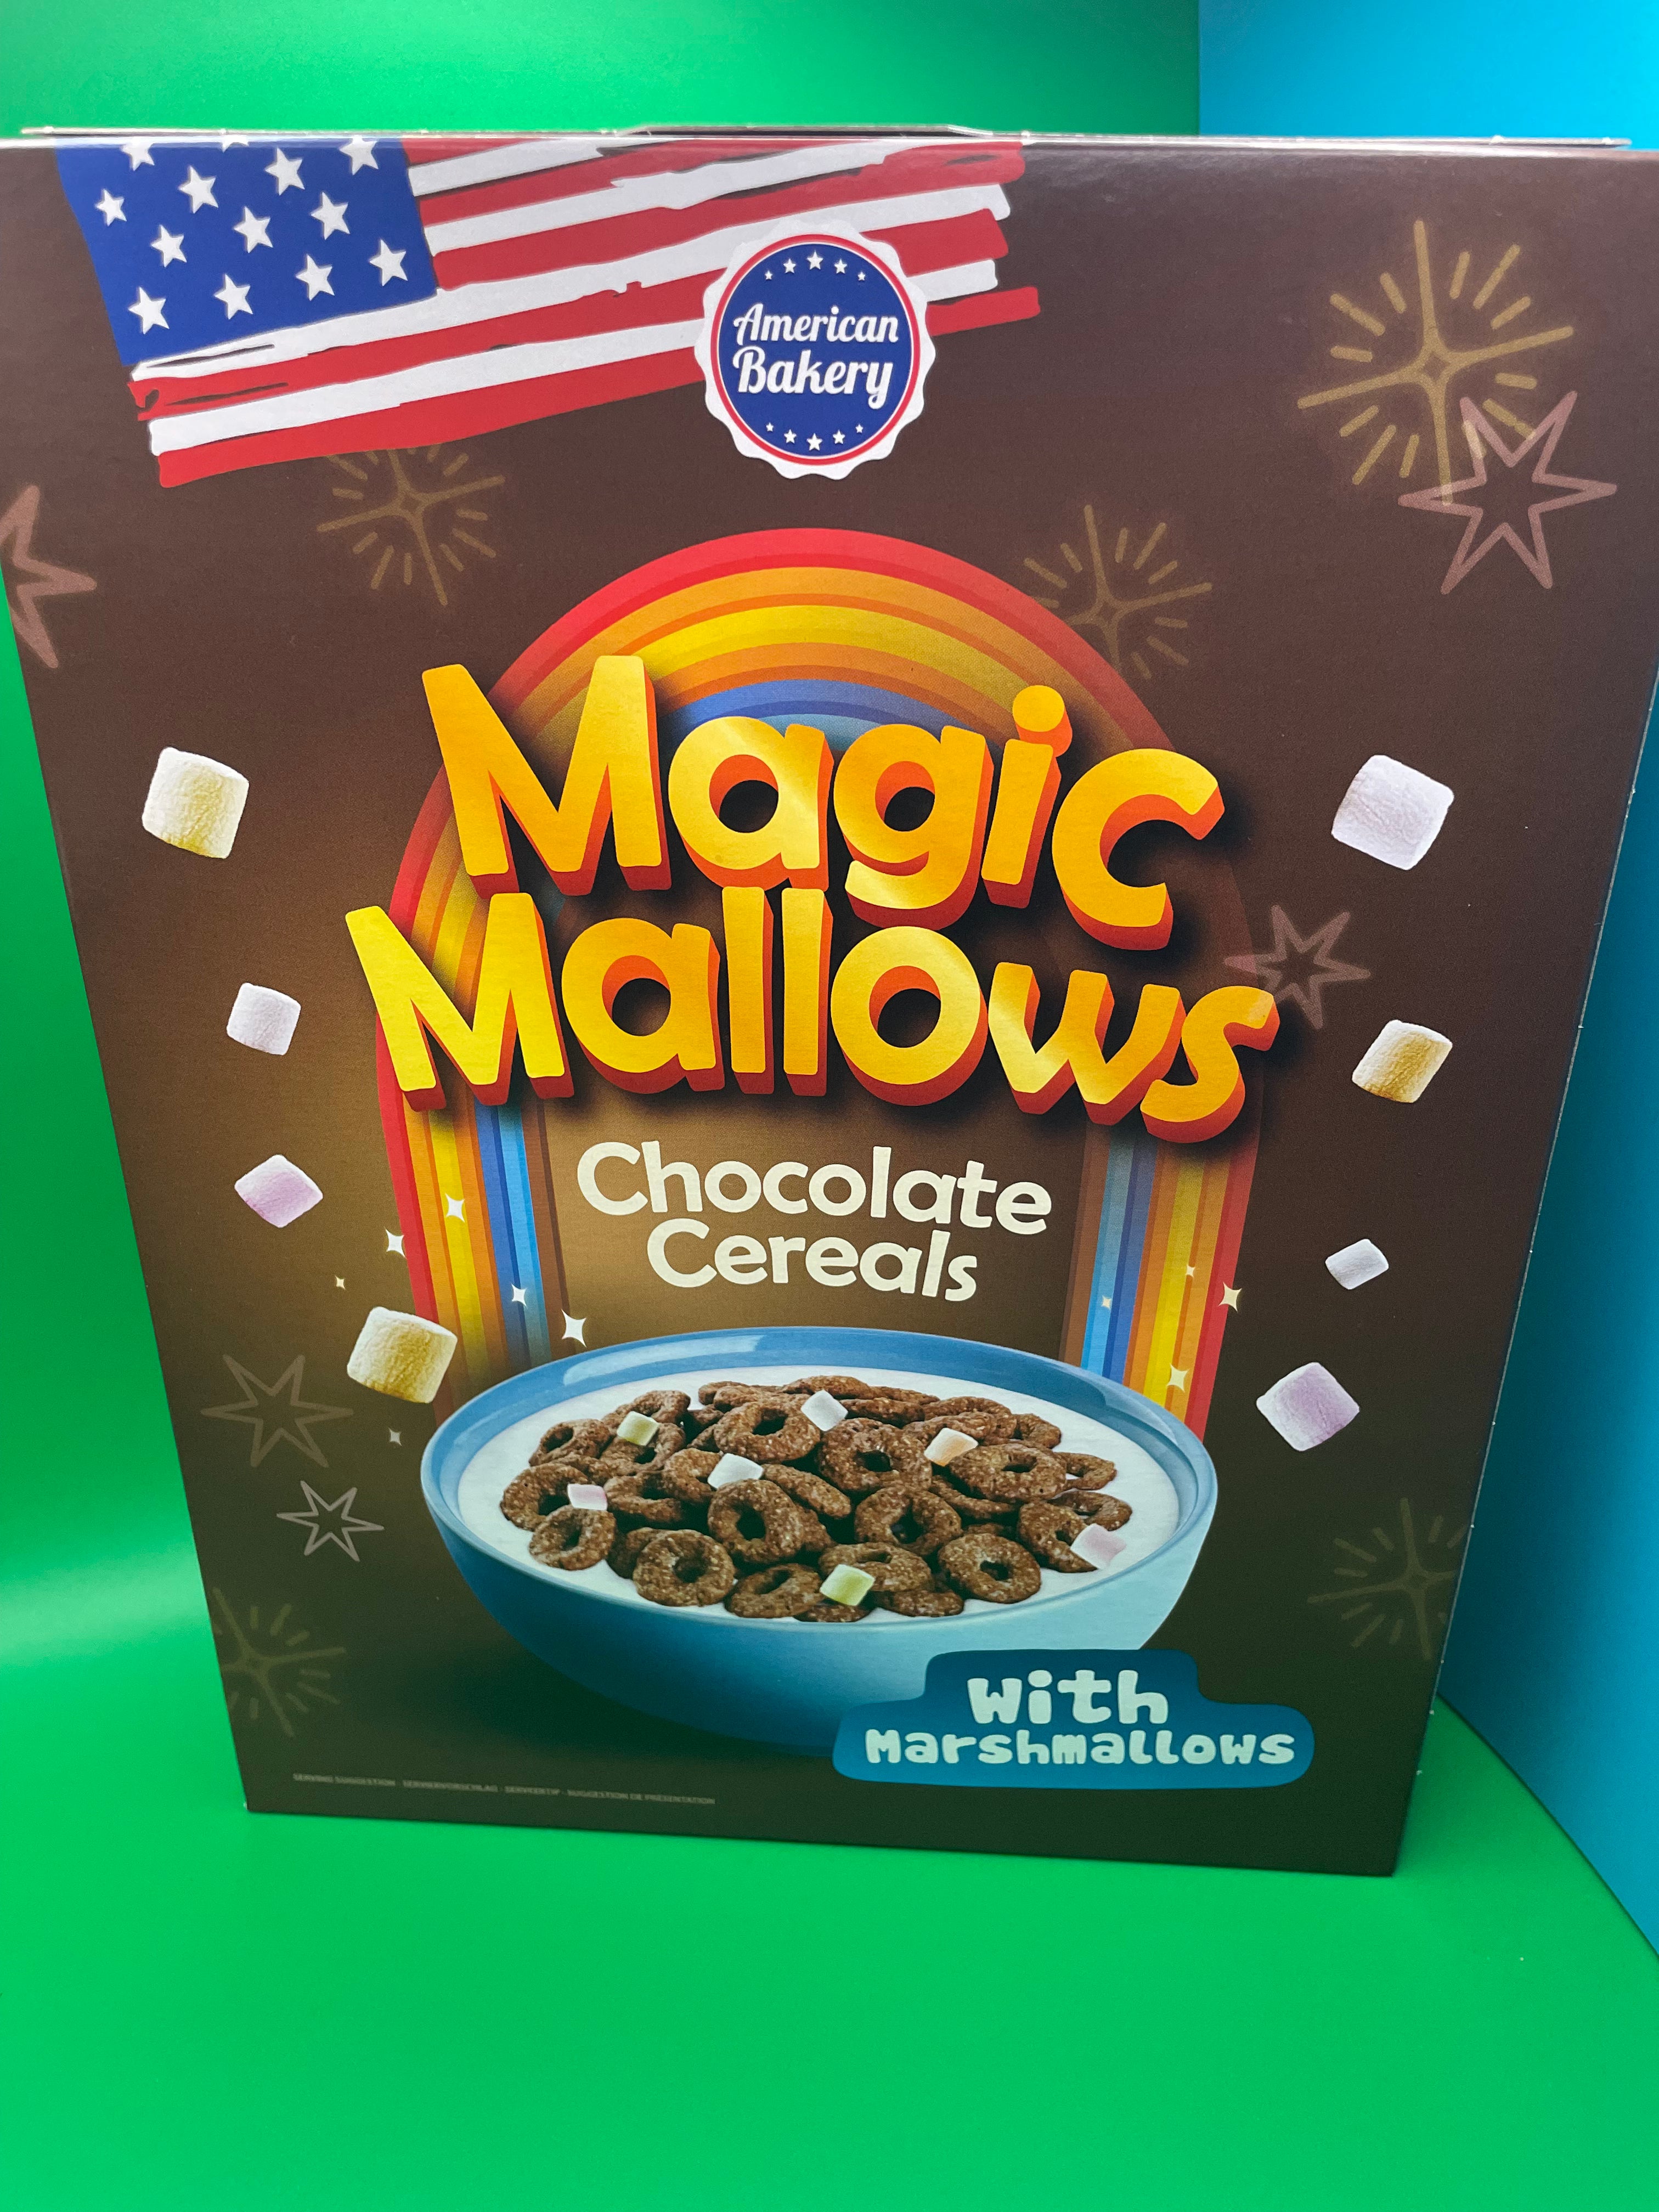 Magic Mellows Chocolate Cereals